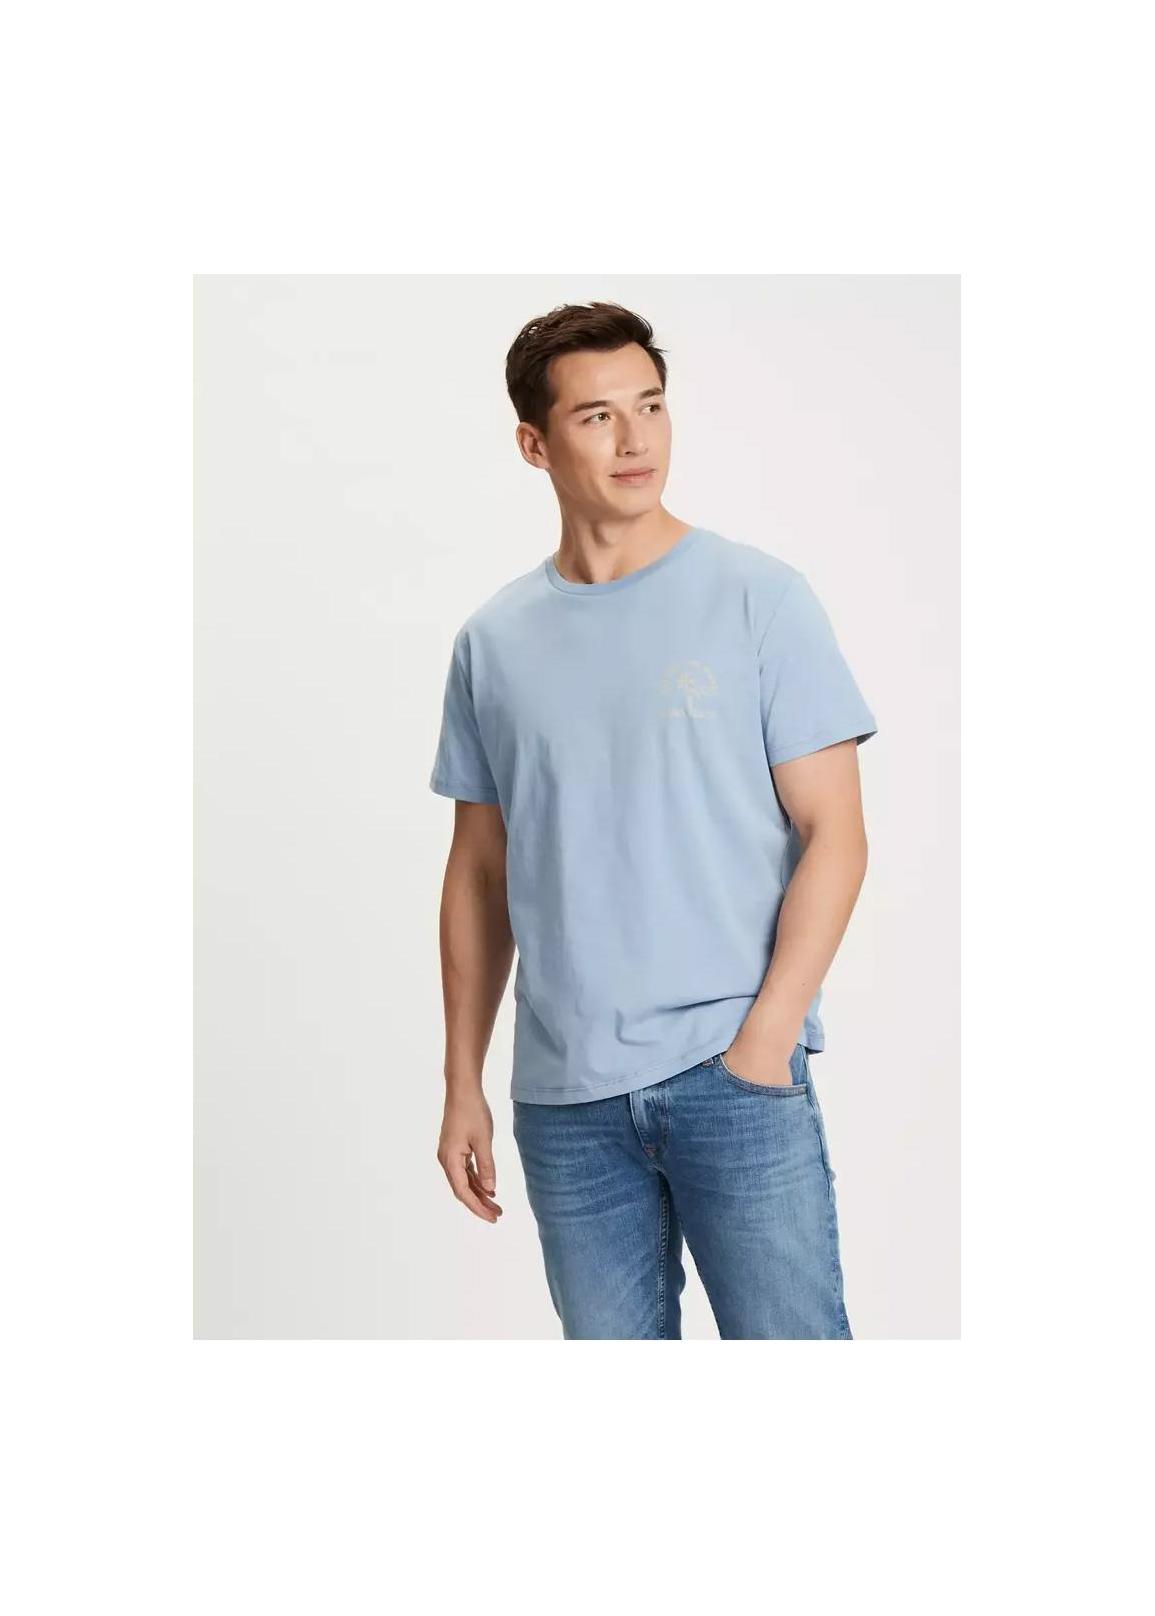 Cross Jeans® T-shirt C-Neck - Indigo